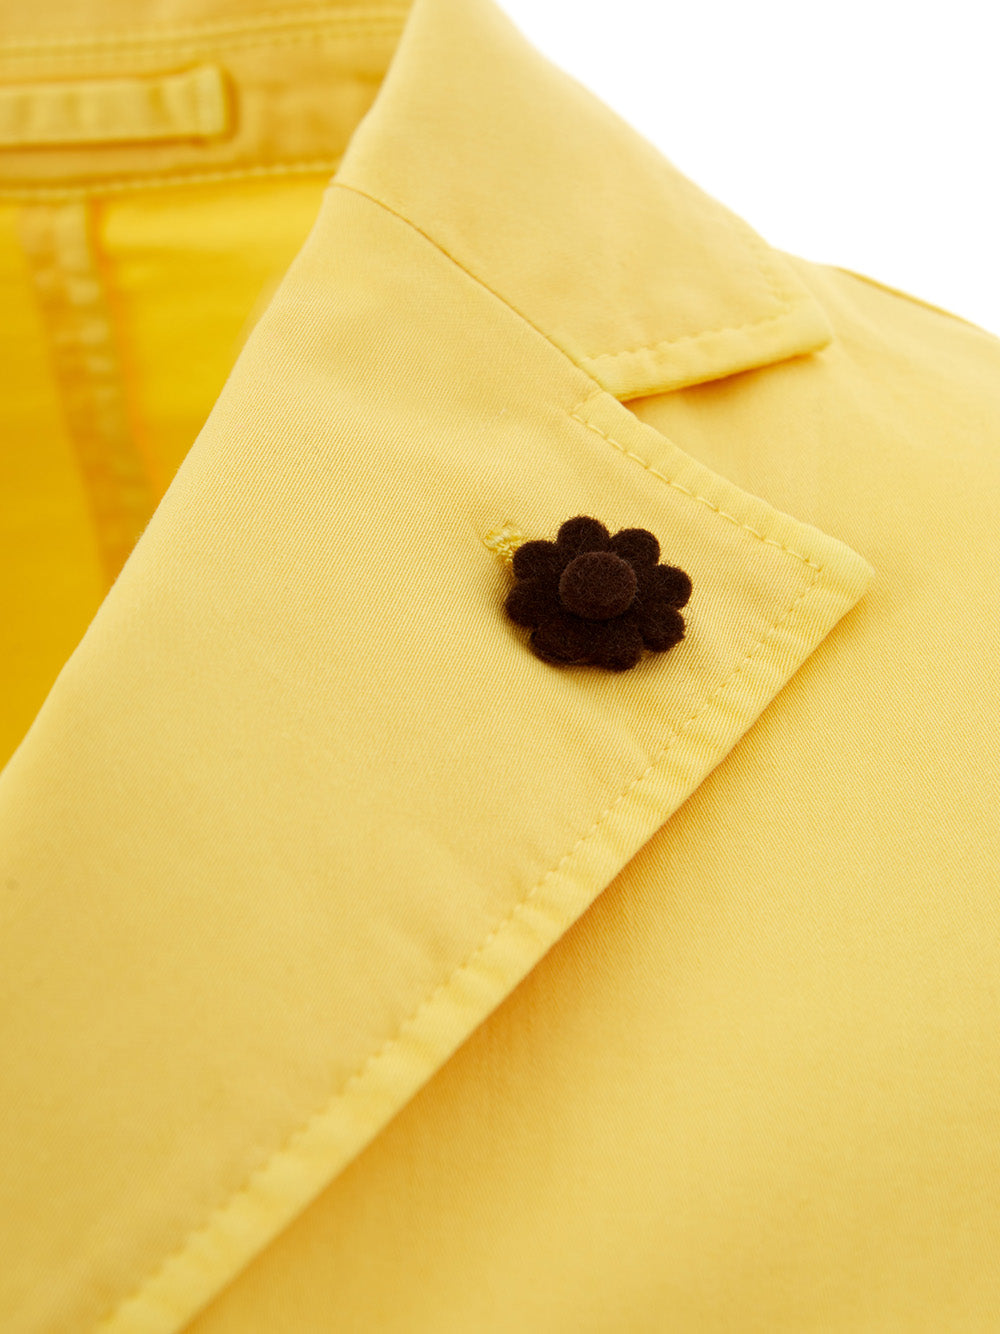 Lardini Yellow Cotton Jacket